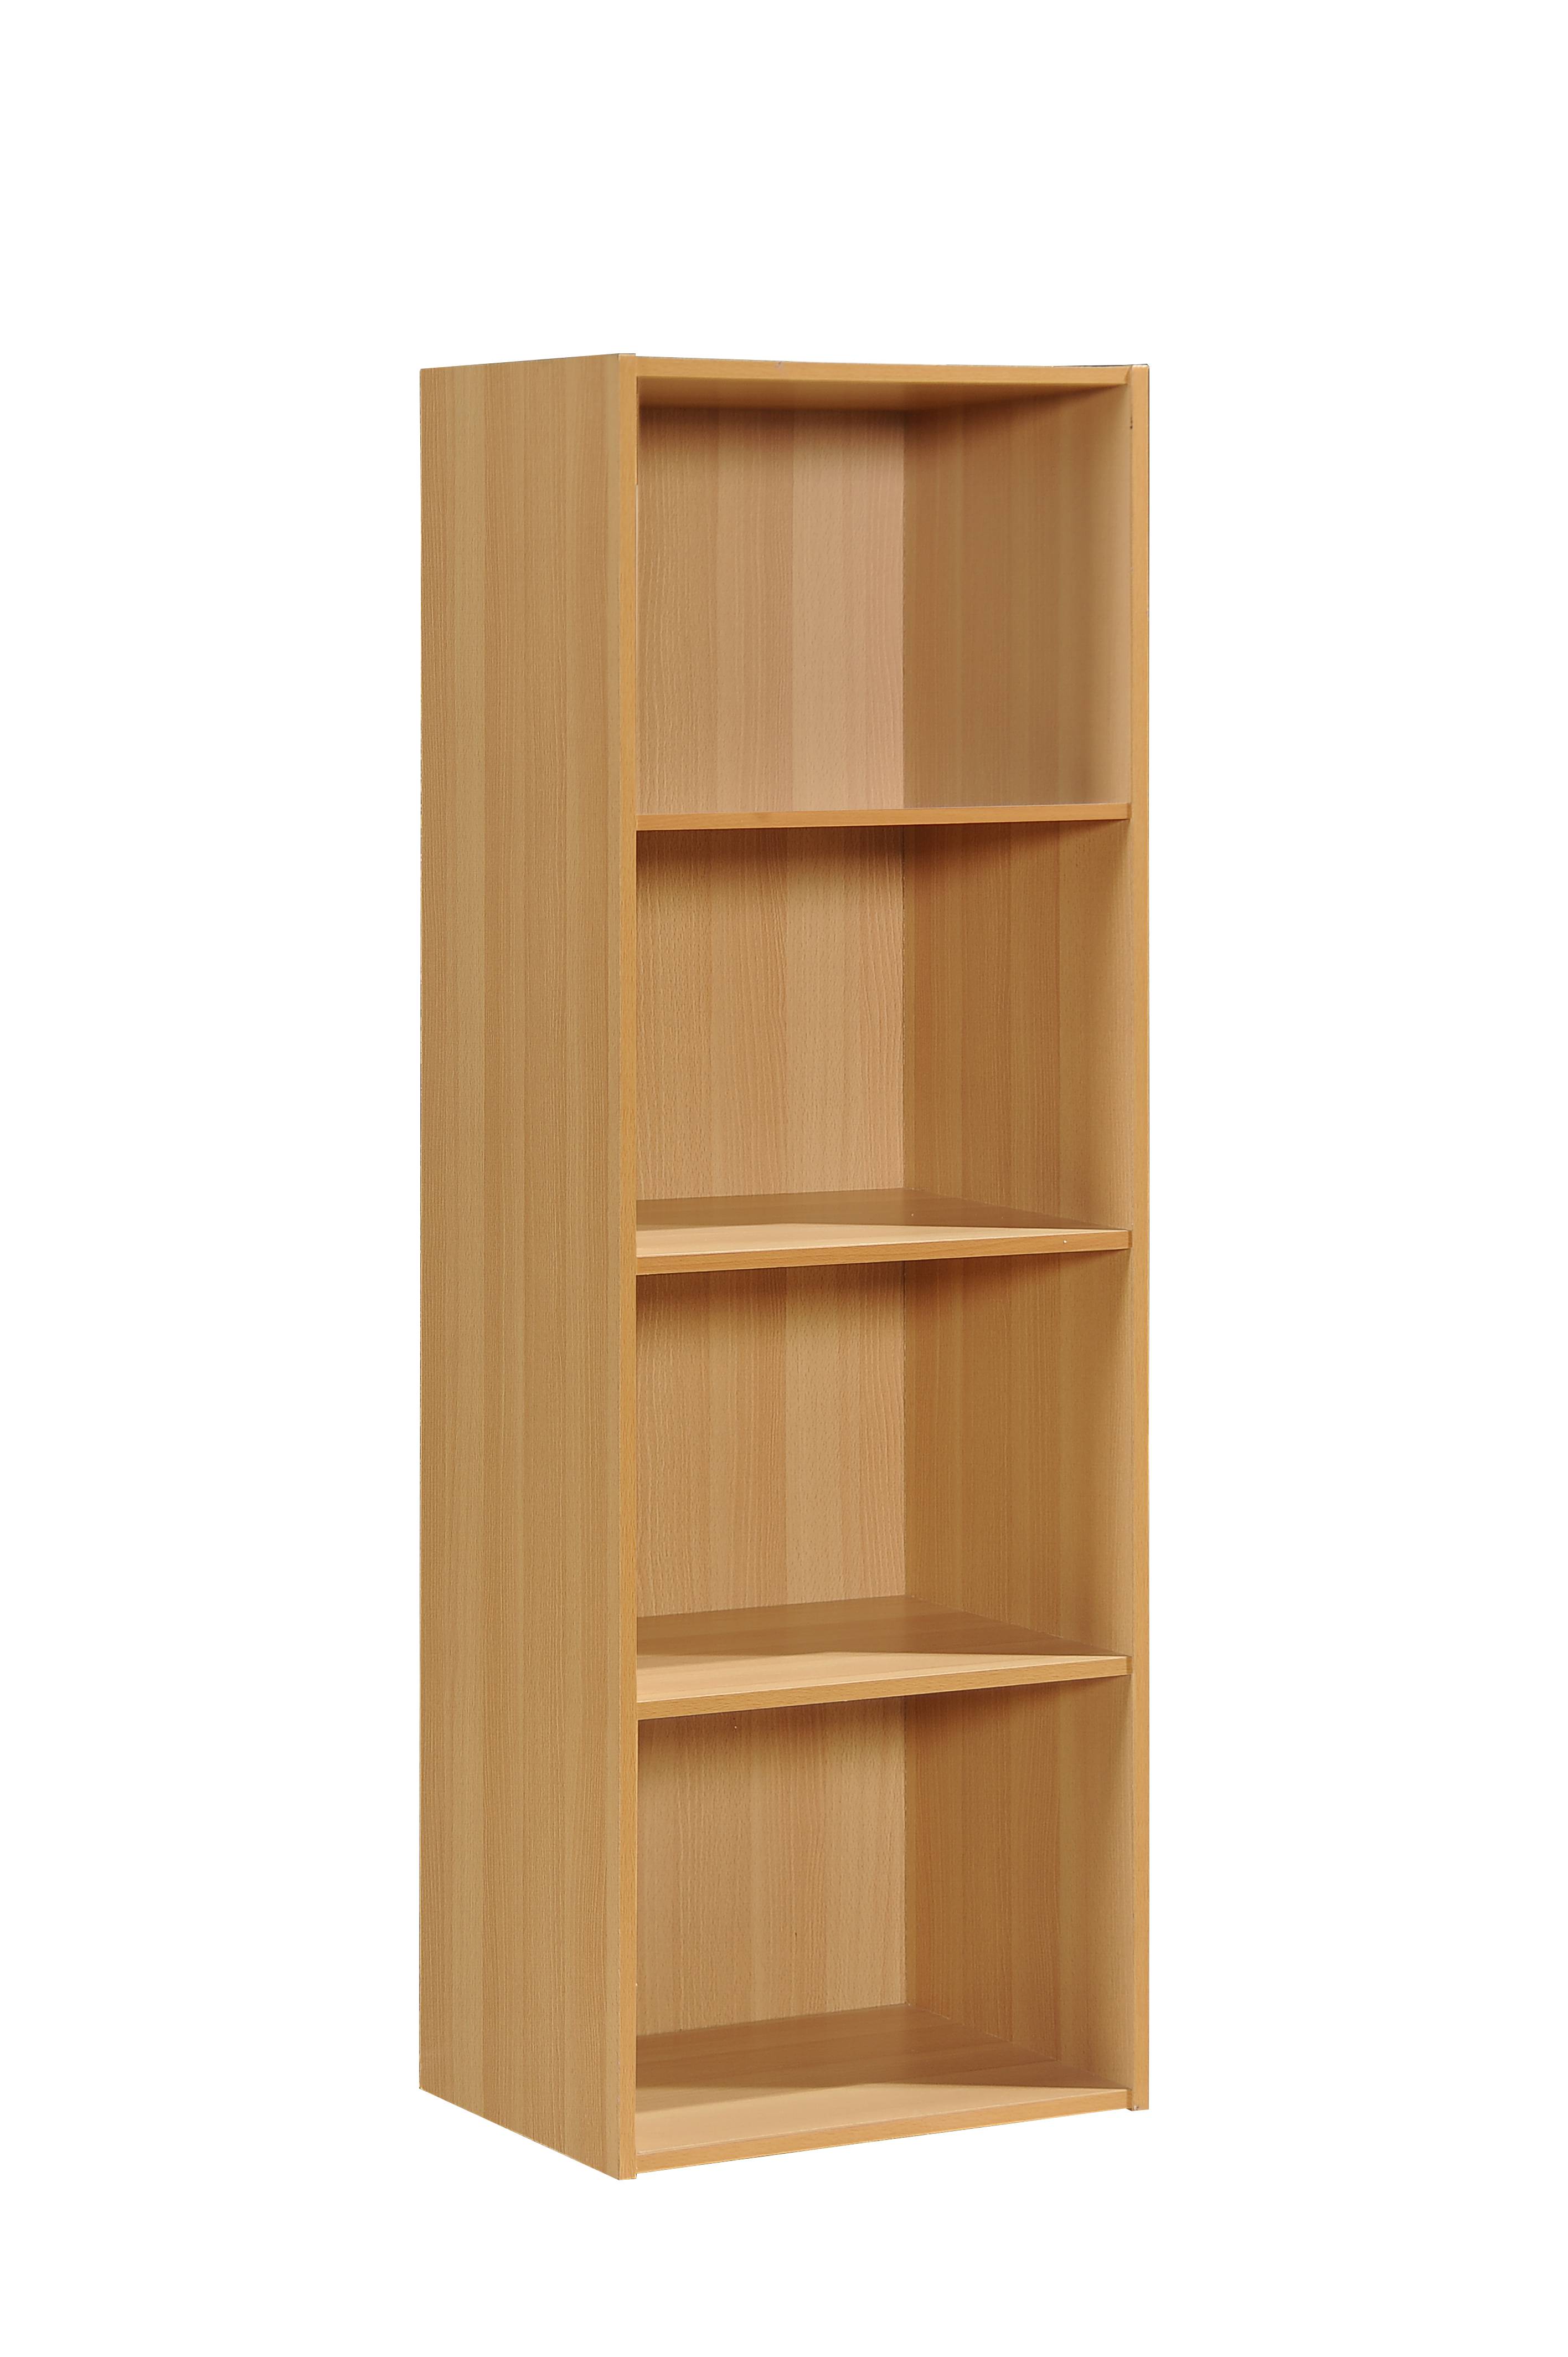 Hodedah 4-Shelf Wood Bookcase, Brown - image 1 of 5